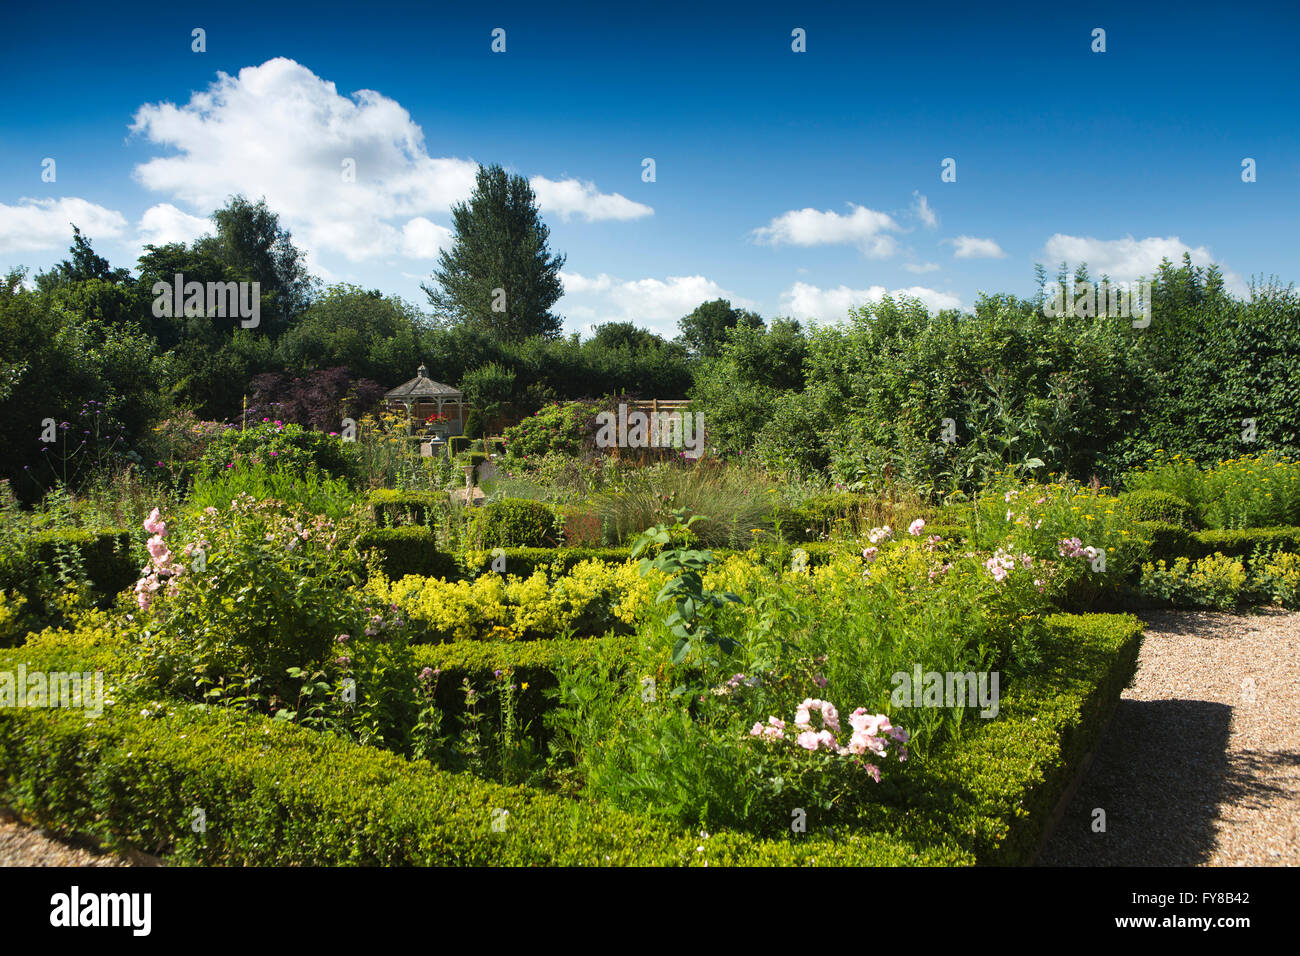 UK, Kent, Smallhythe, Chapel Down Vineyard, herb garden Stock Photo